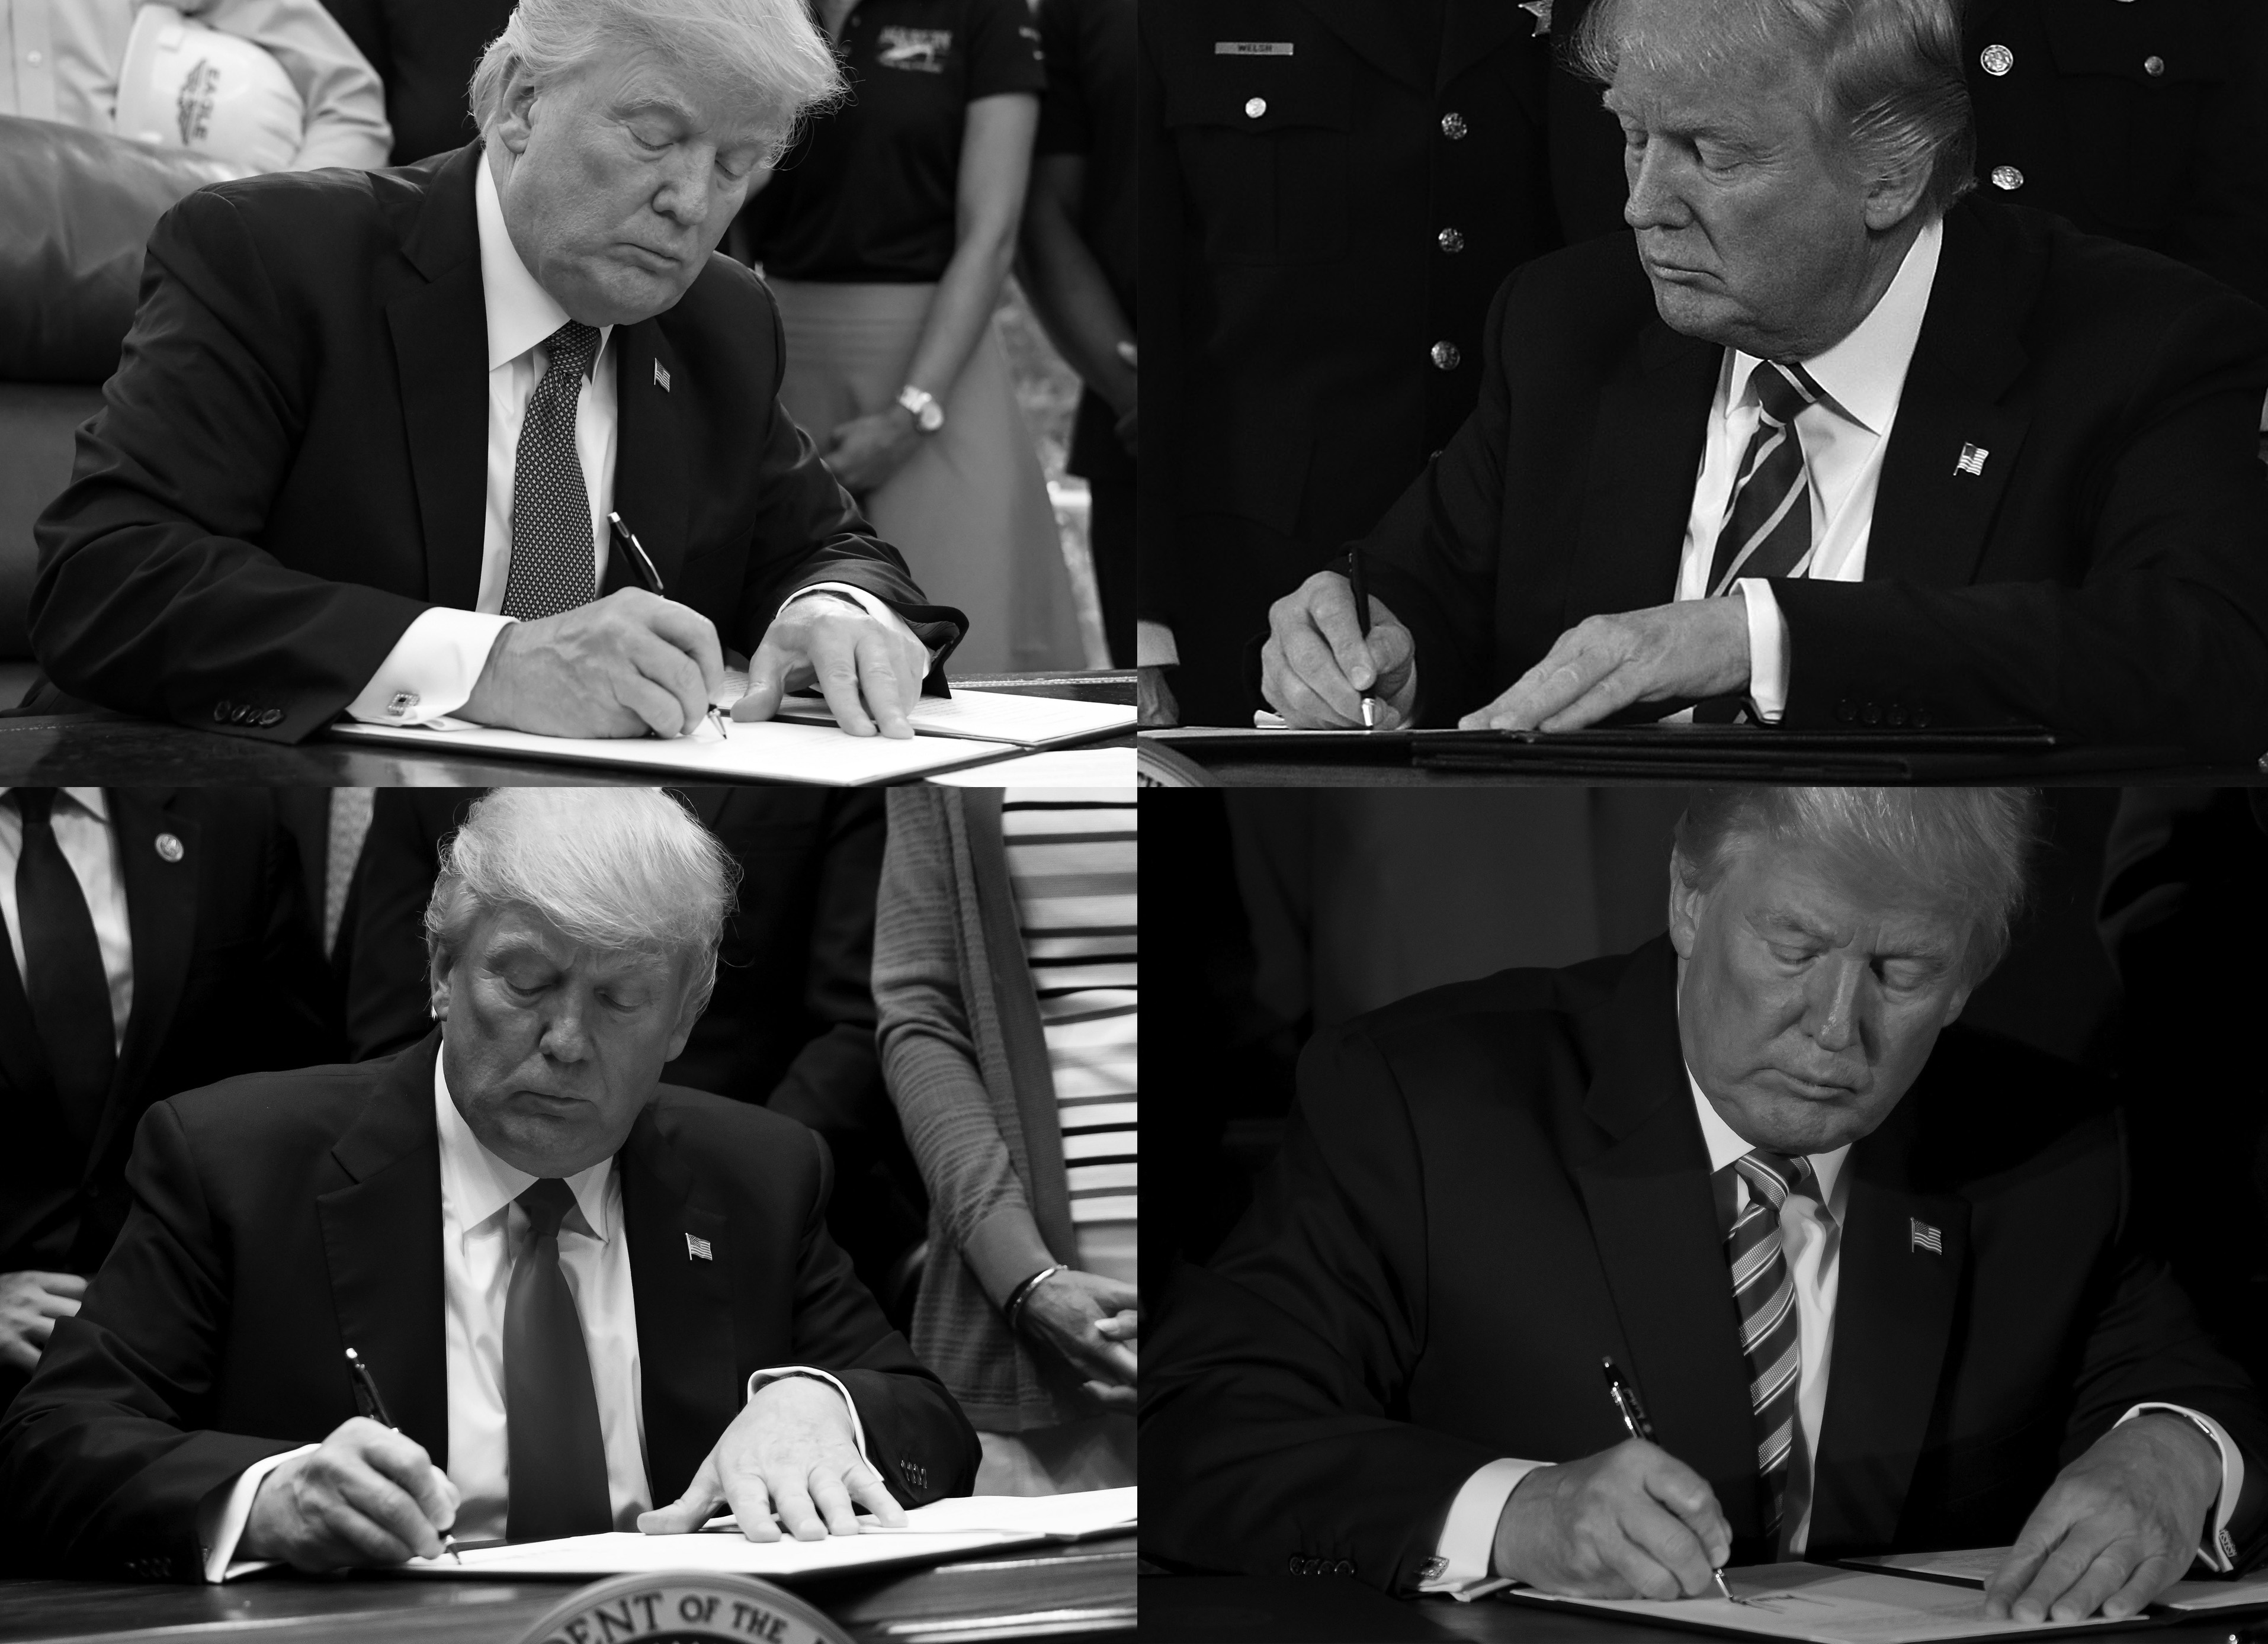 Trump signing things